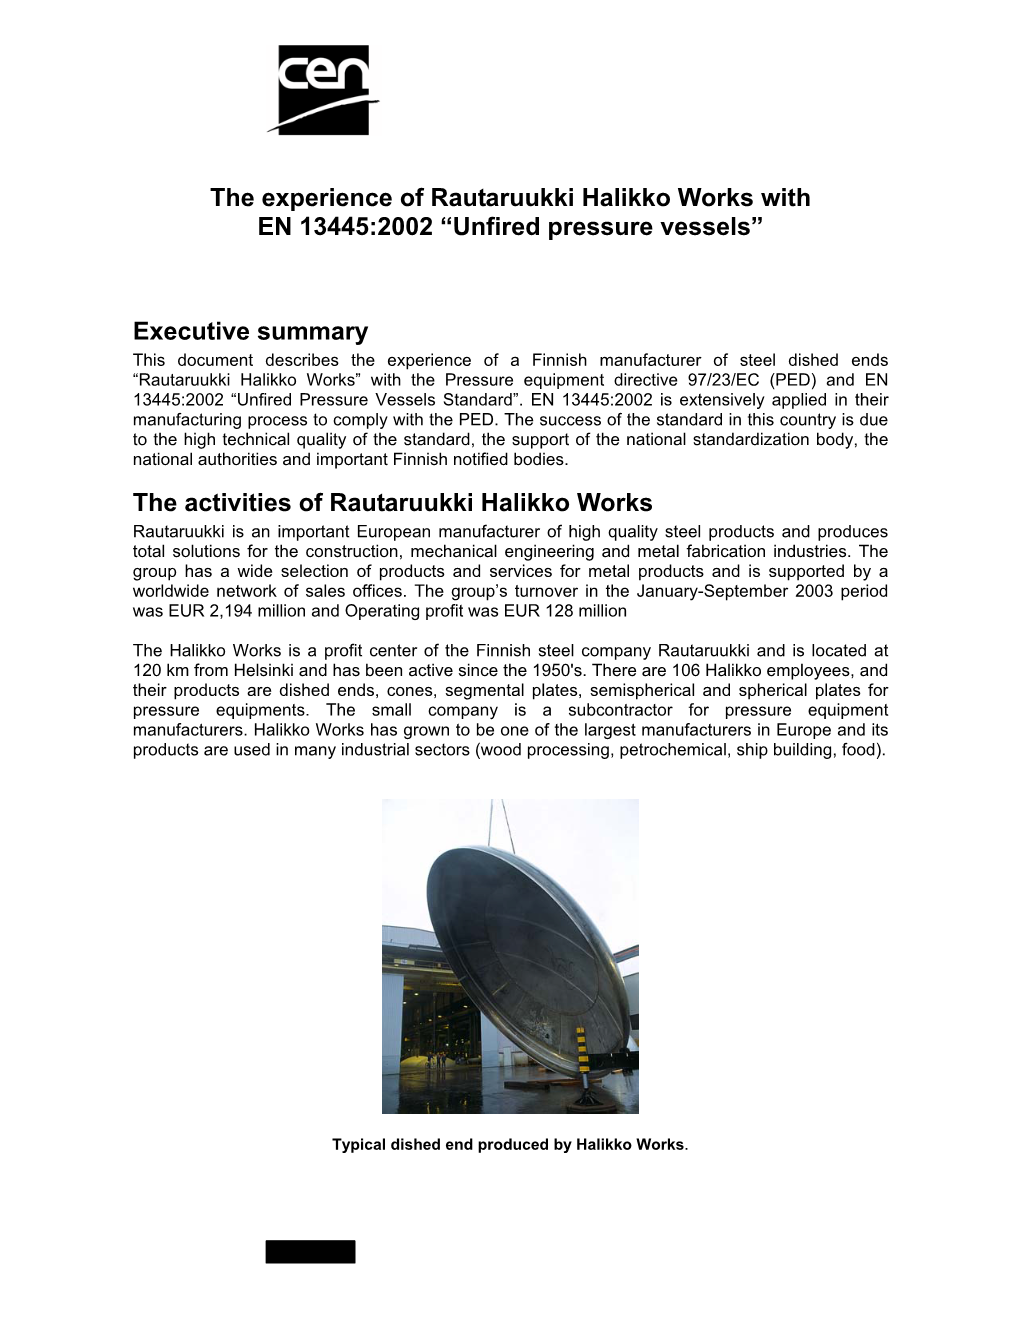 The Experience of Rautaruukki Halikko Works with EN 13445:2002 “Unfired Pressure Vessels” Executive Summary the Activities